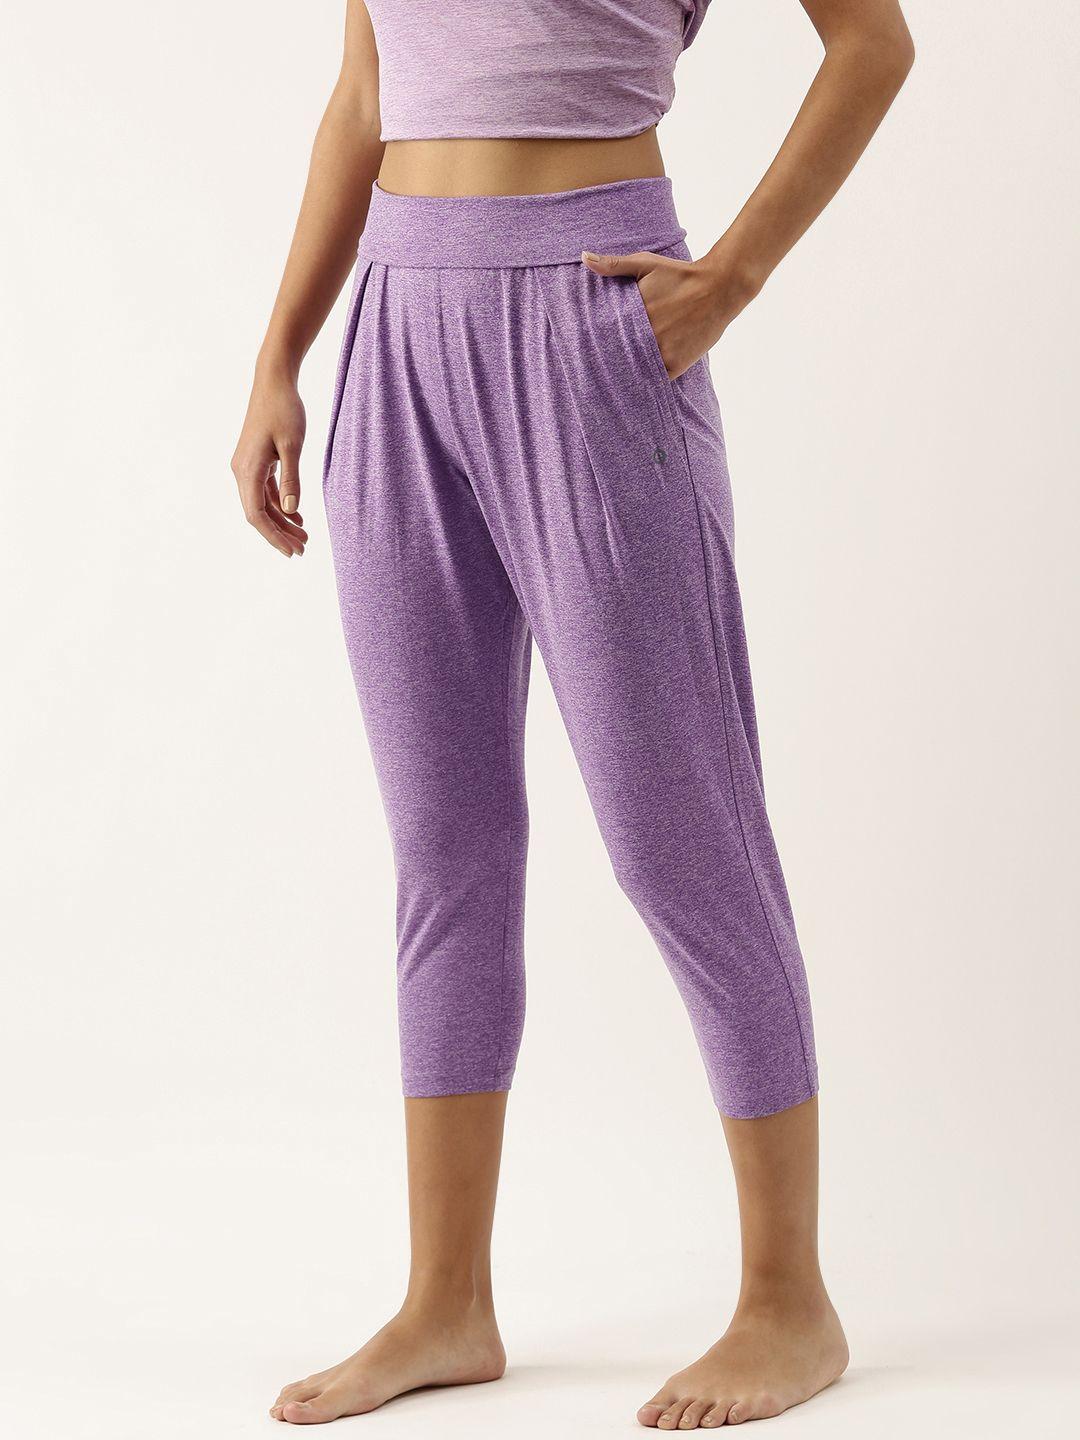 enamor womens purple athleisure yoga pants